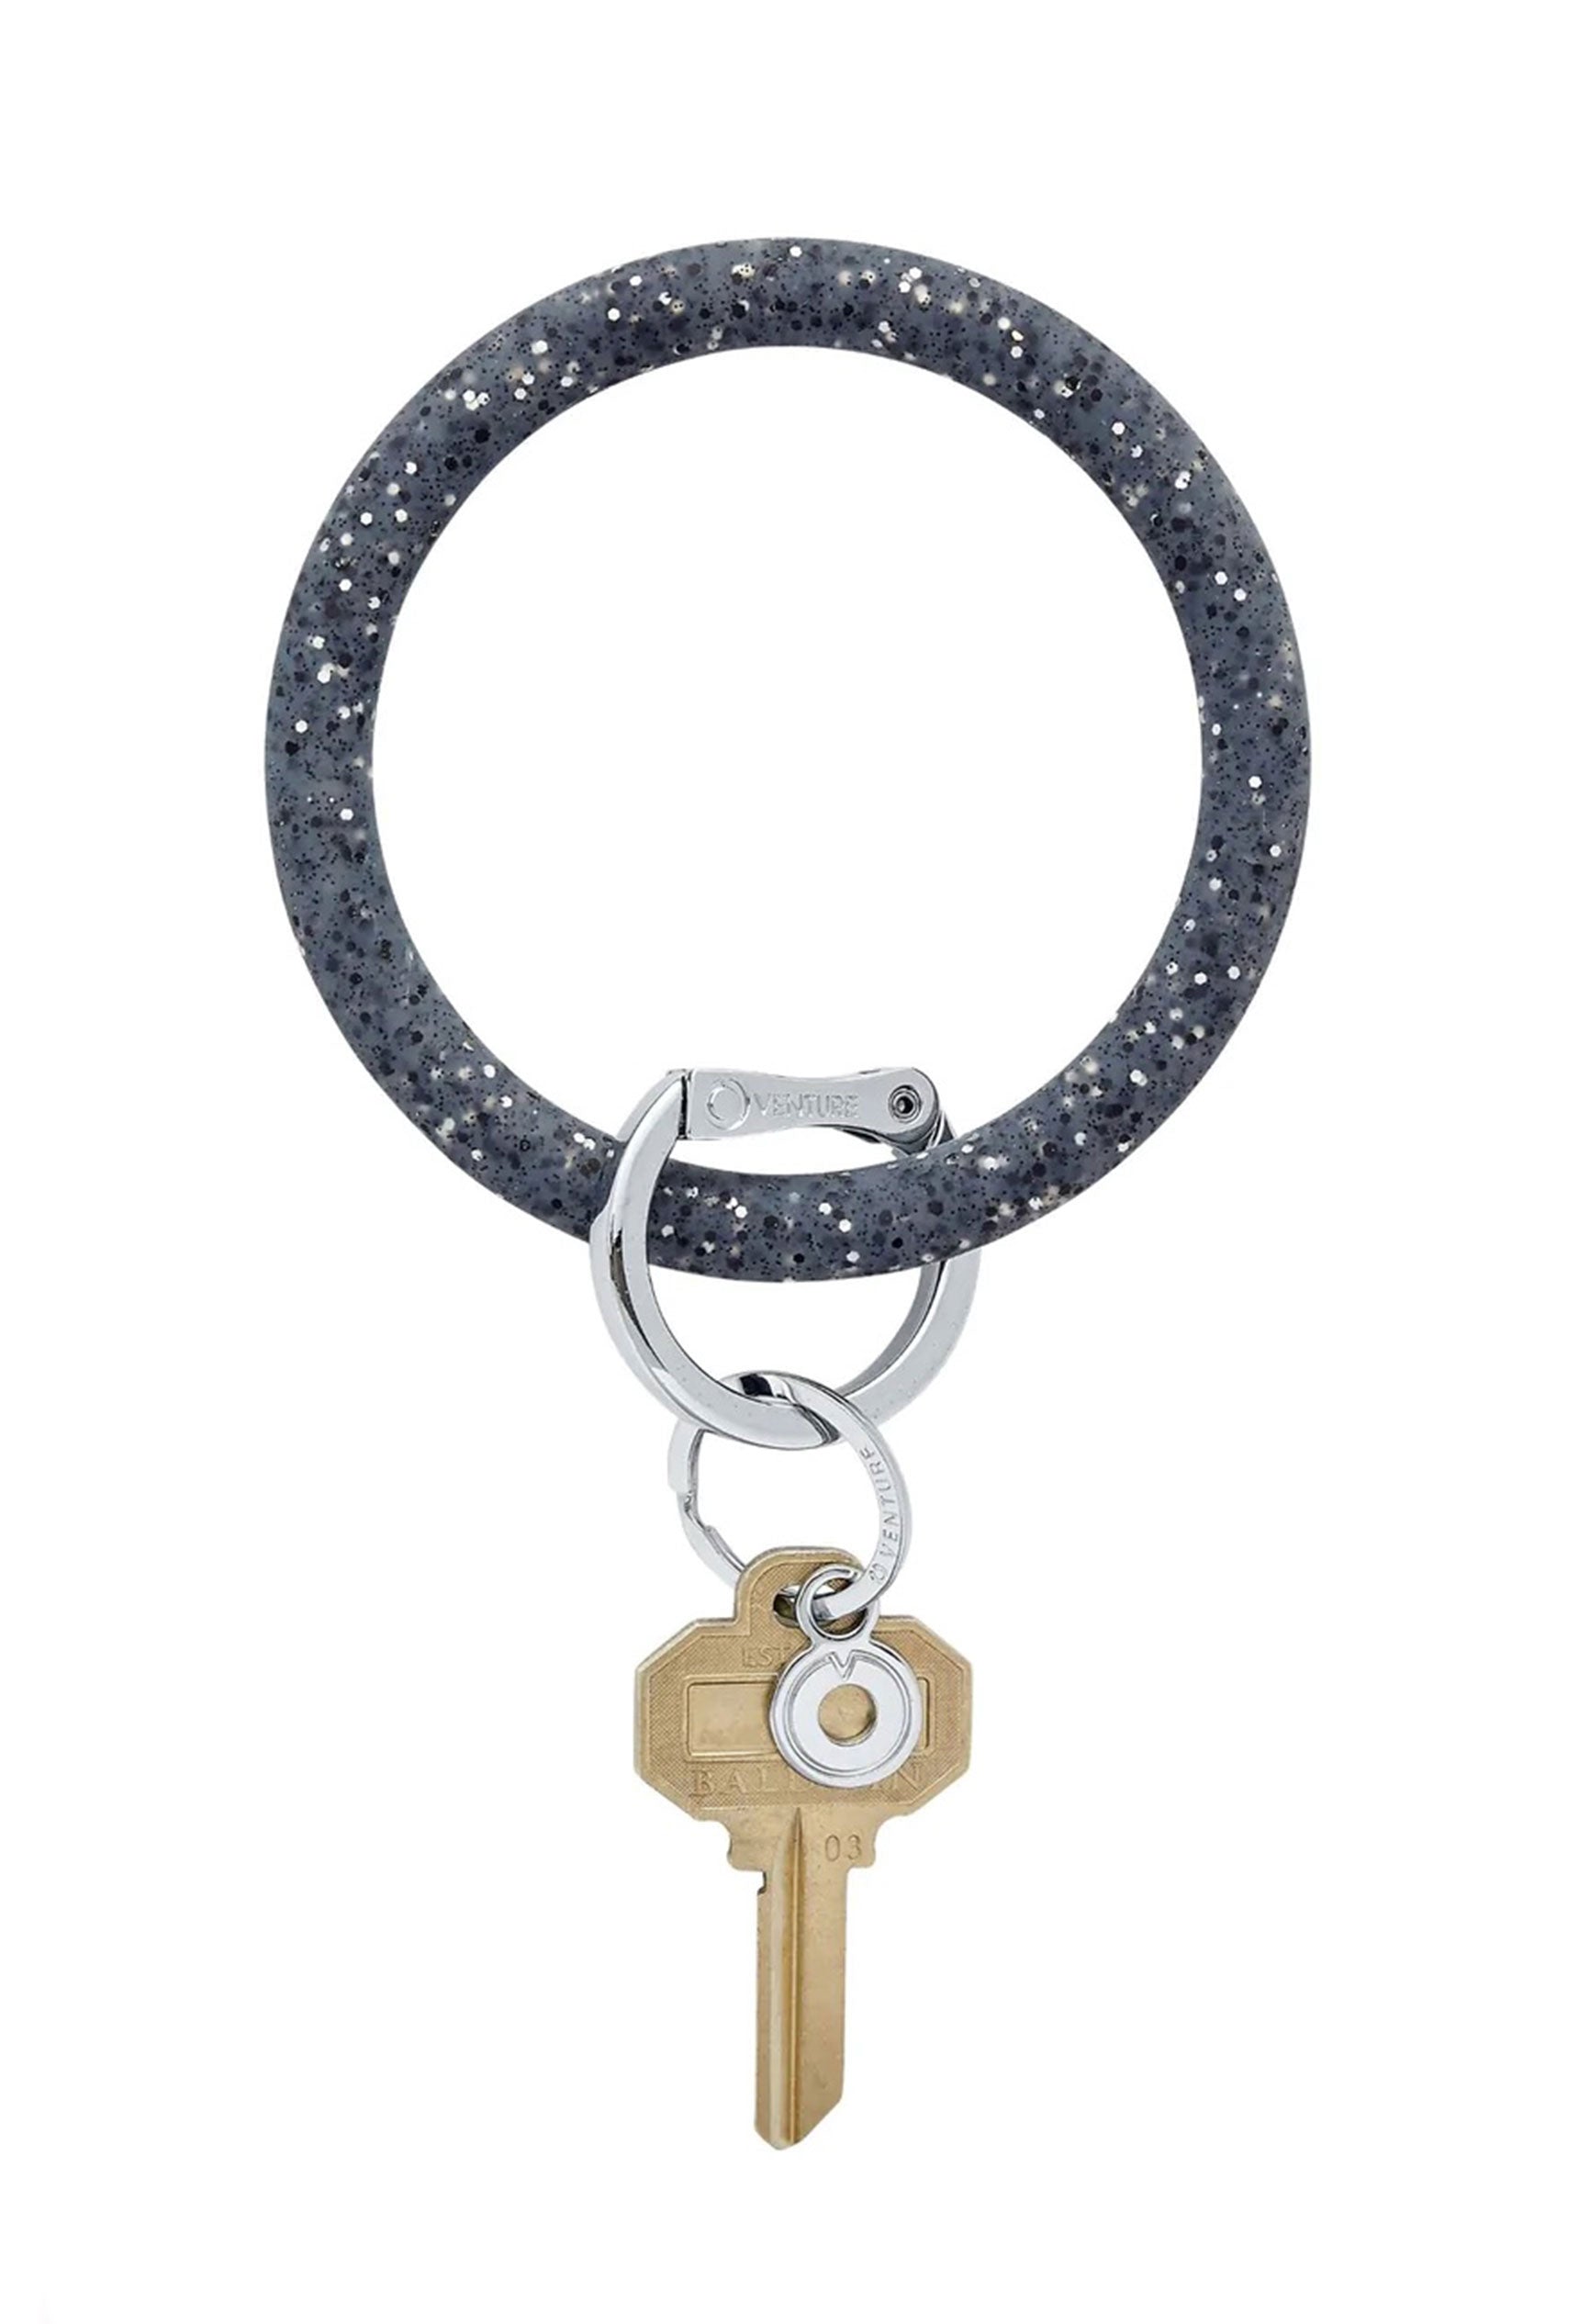 O-Venture Silicone Key Ring in Black Confetti, silicone key ring, black and silver confetti, silver metal detailing